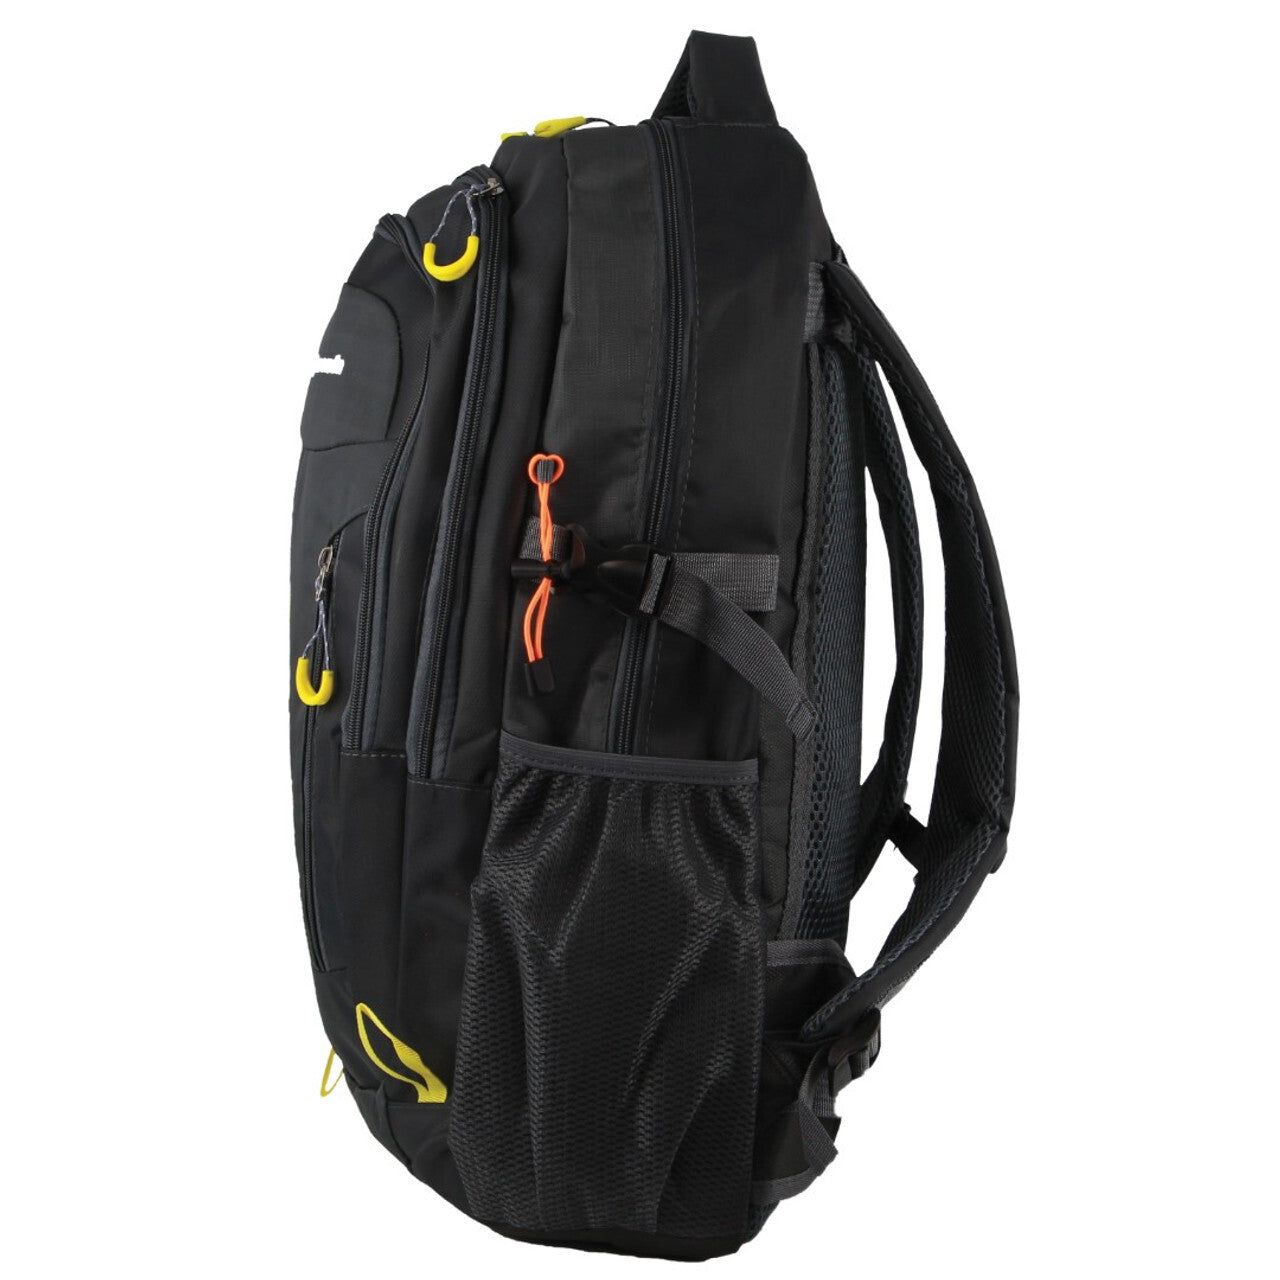 Mens Nylon Adventure Travel & Sport Large Backpack Bag in Grey/Black